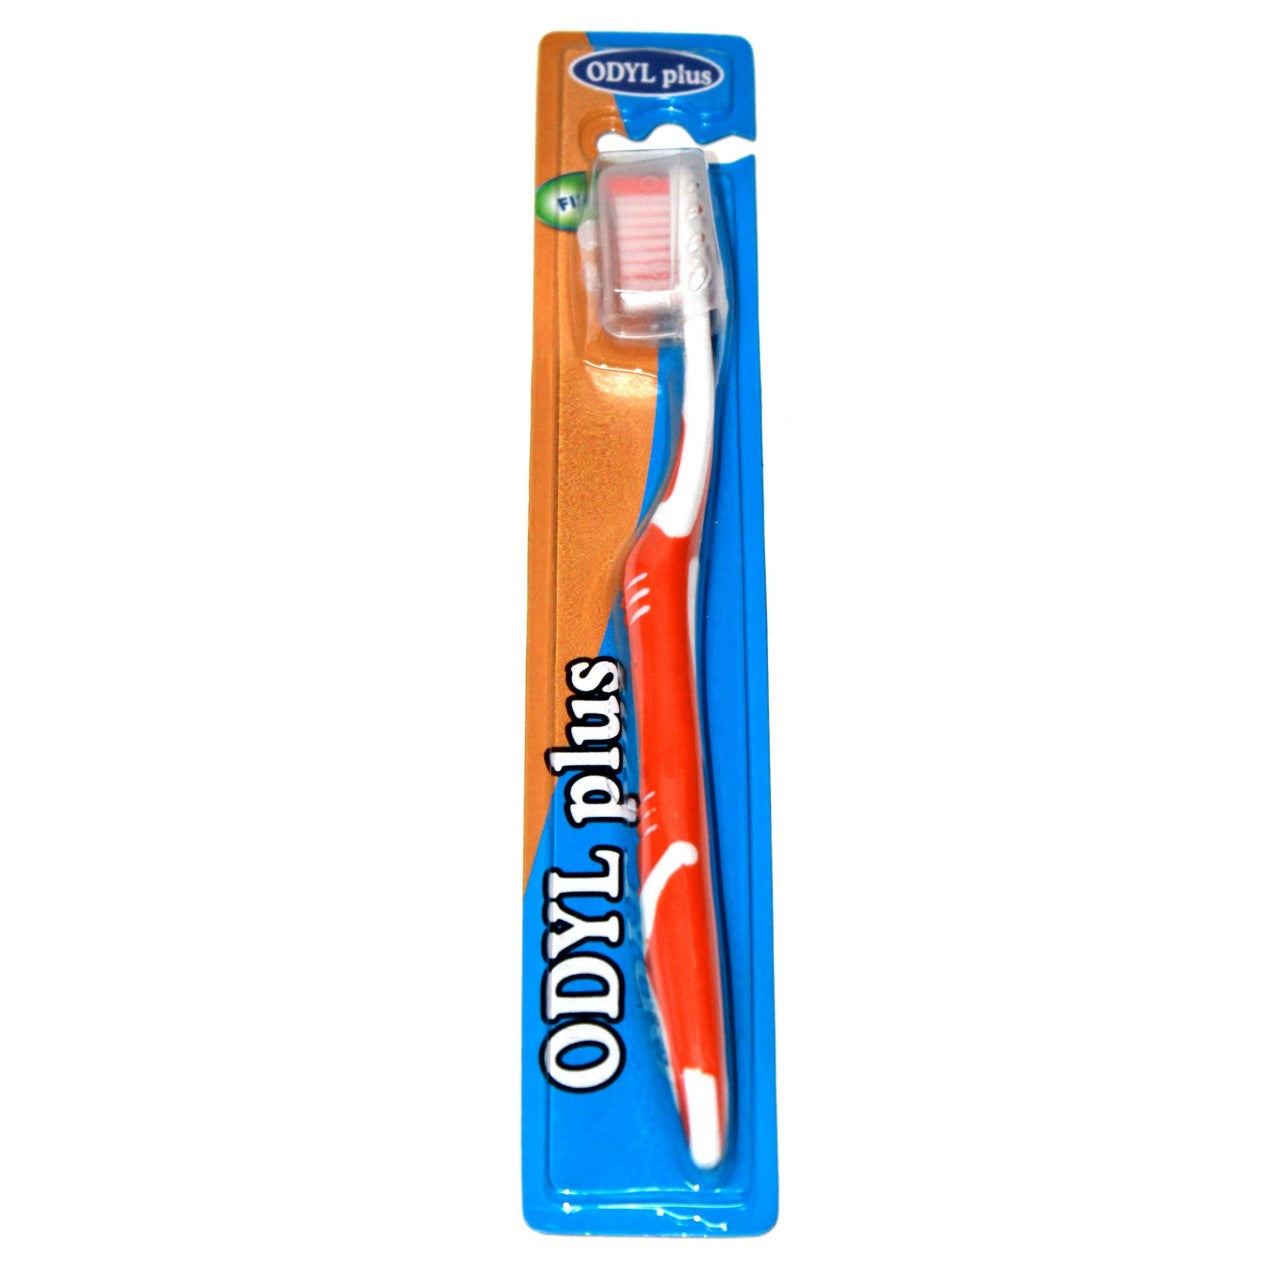 ODYL Plus Toothbrush Firm